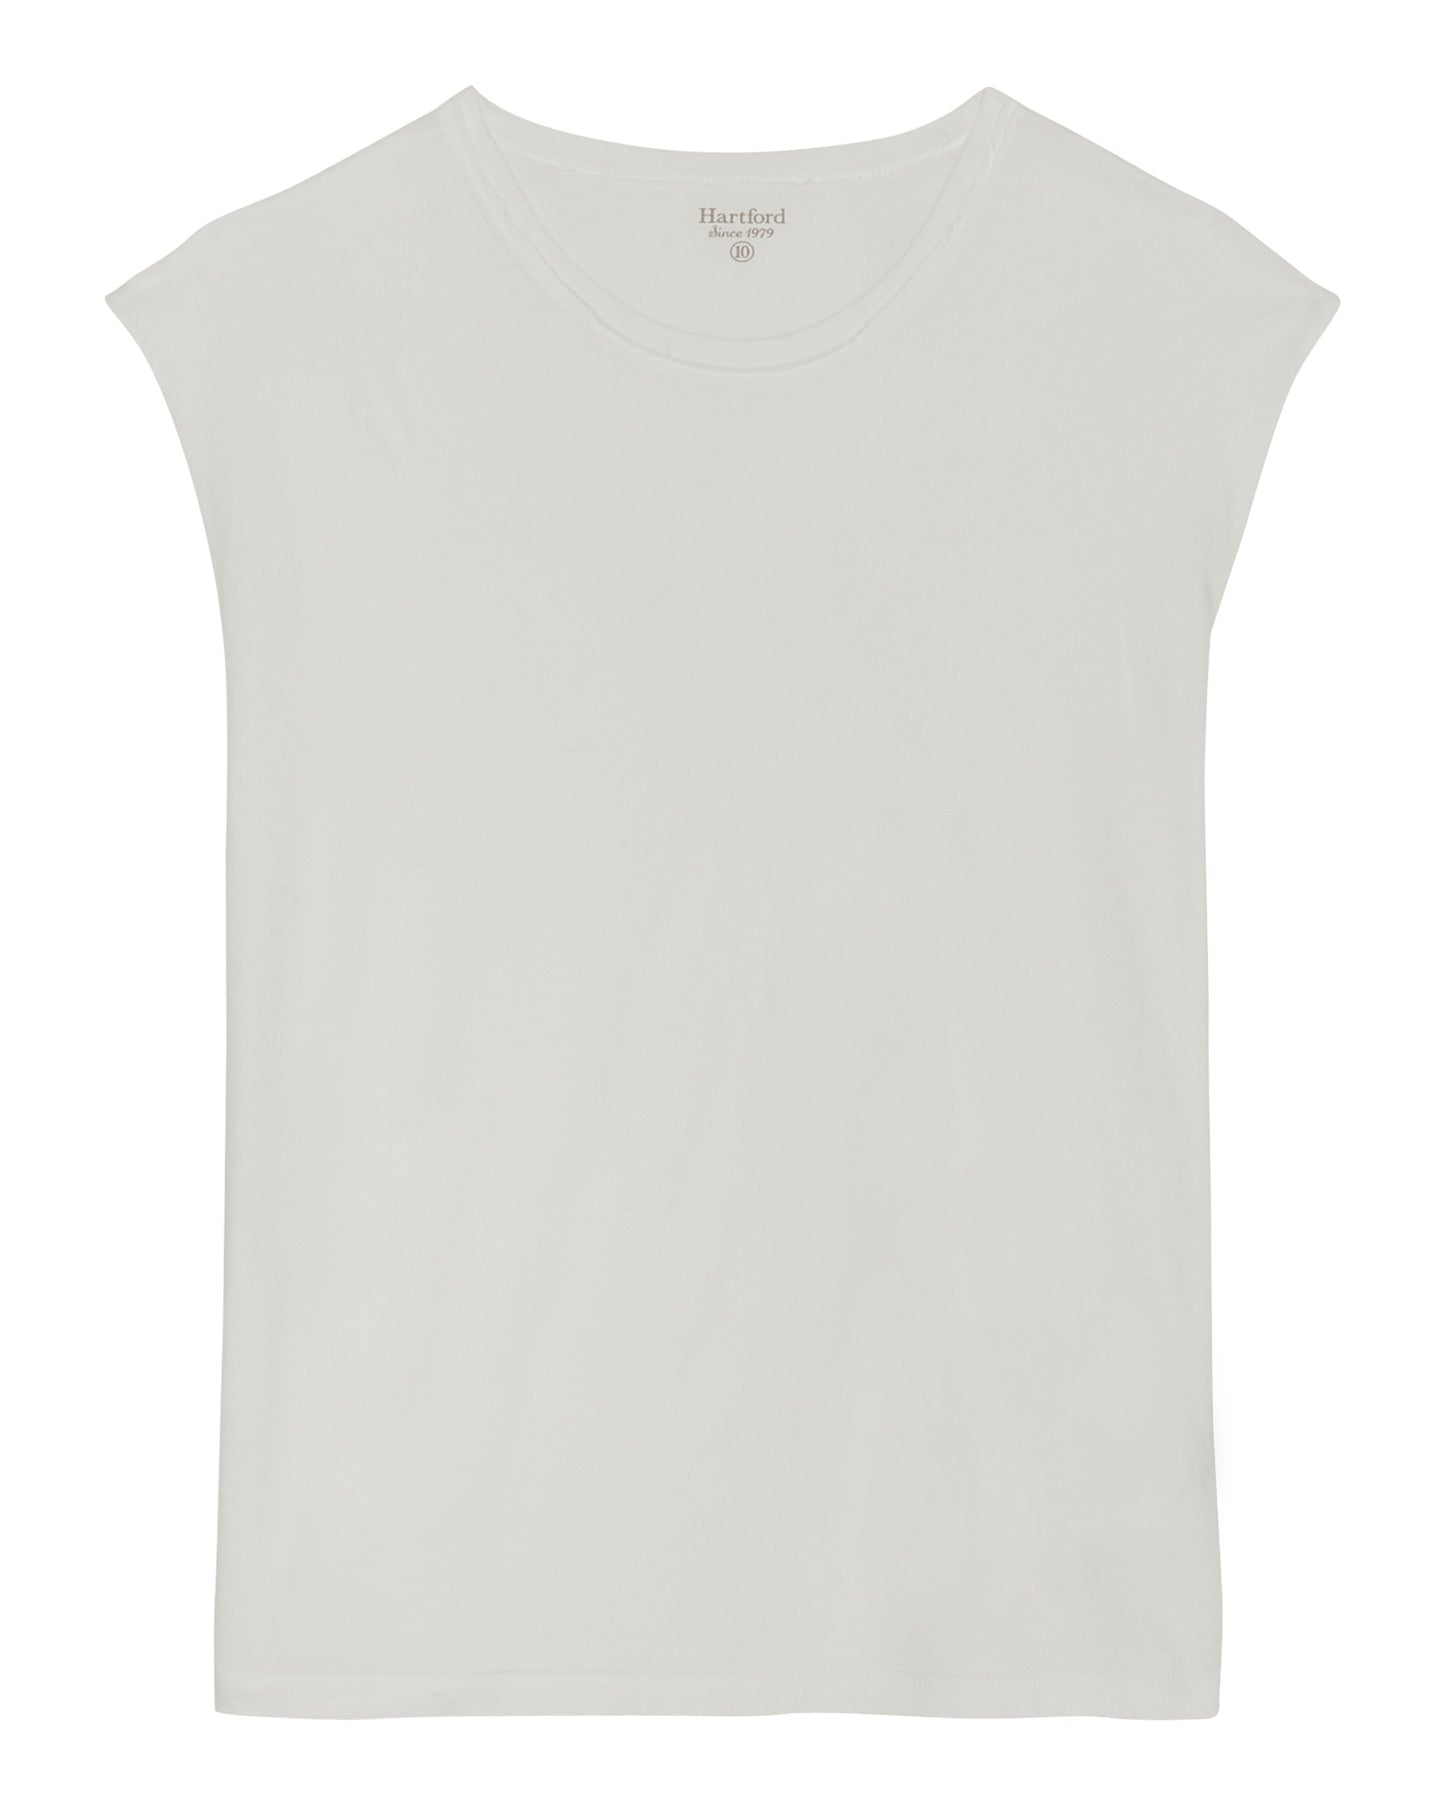 Telorn Girls' White Jersey T-Shirt